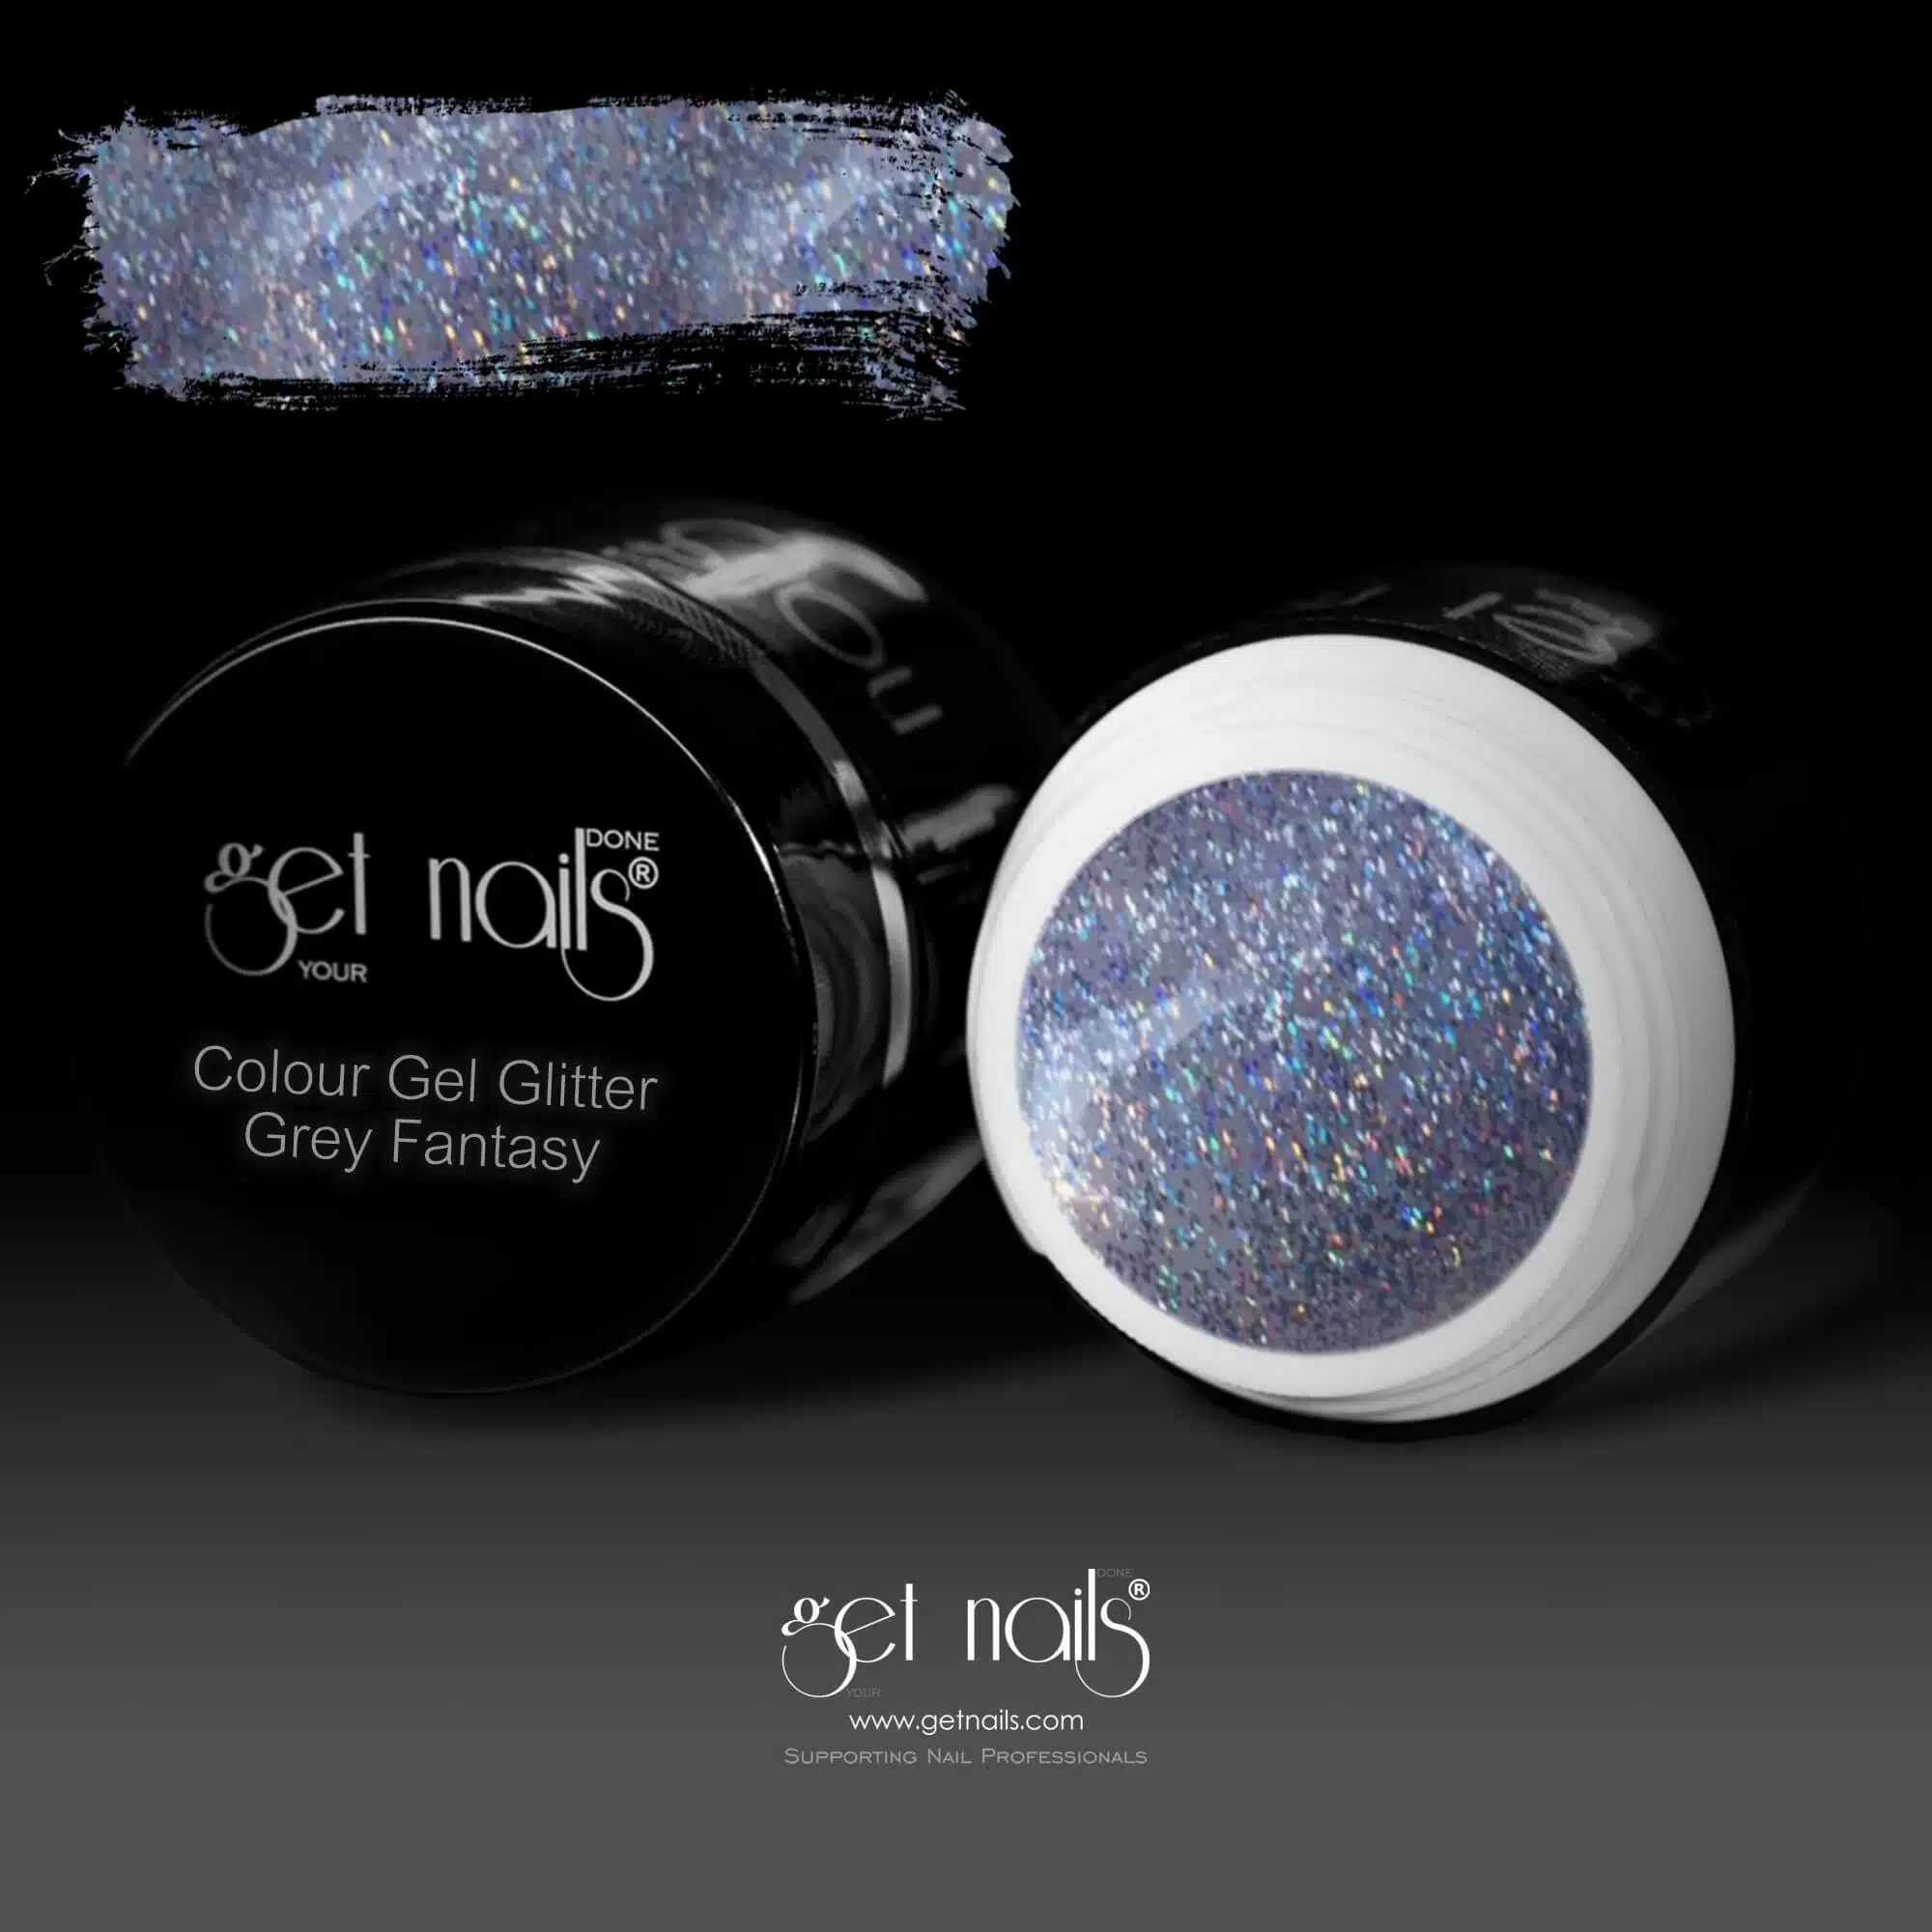 Get Nails Austria - Color Gel Glitter Gray Fantasy 5g